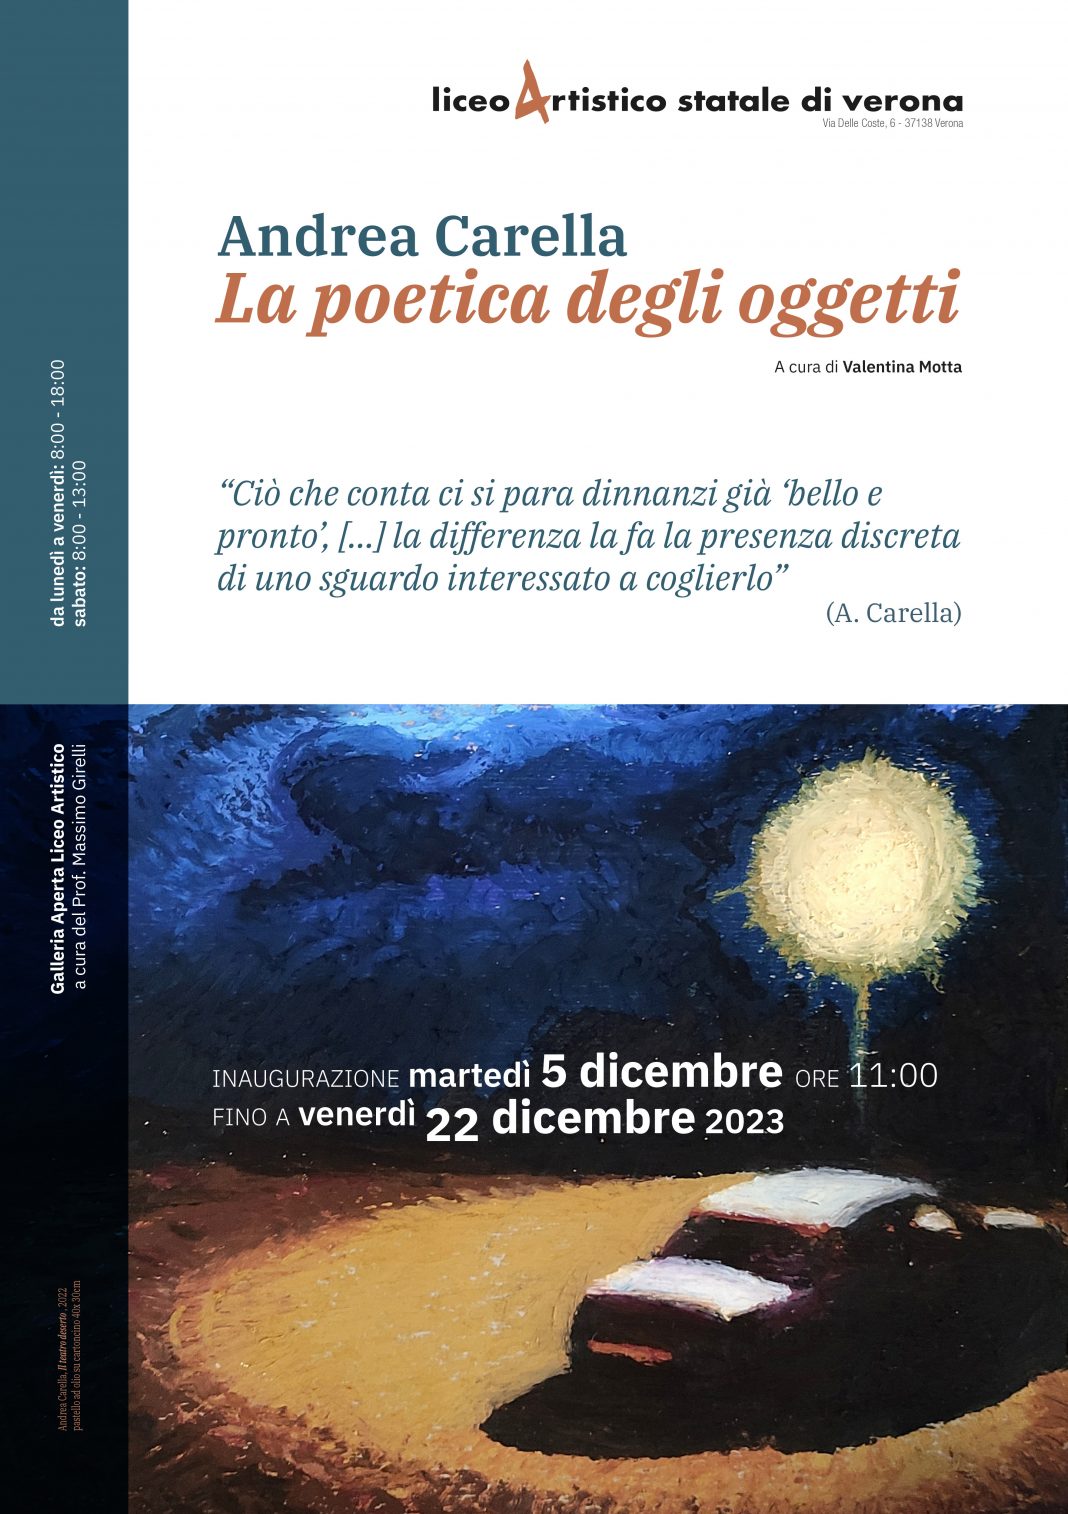 La poetica degli oggettihttps://www.exibart.com/repository/media/formidable/11/img/db9/GALA-_-Andrea-Carella-locandina-web-1068x1514.jpg